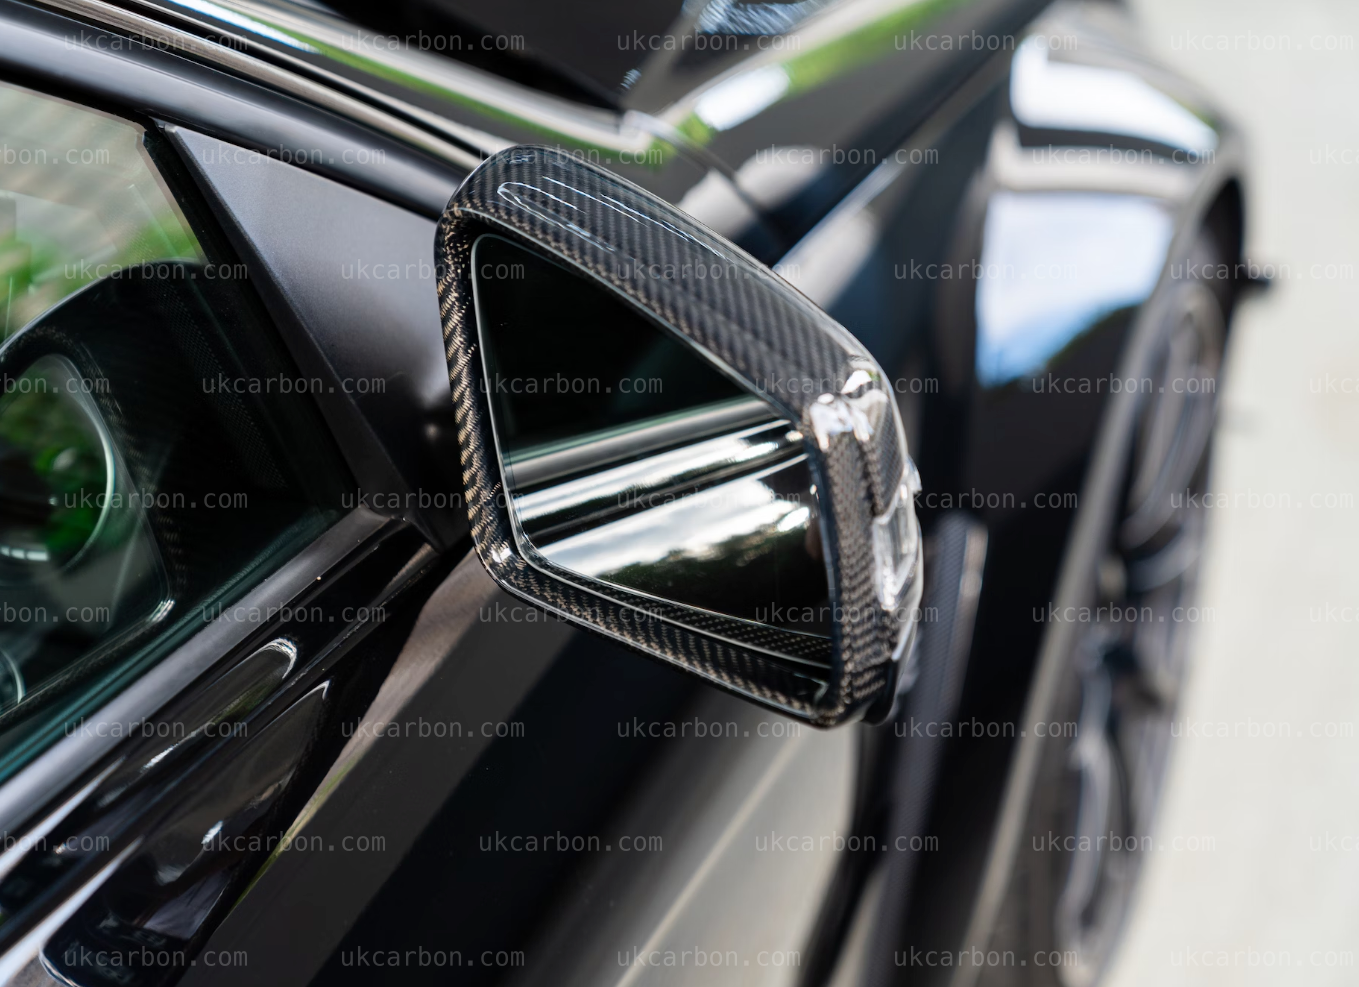 Mercedes Benz A CLA C E Class Carbon Fibre Mirror Replacements by UKCarbon